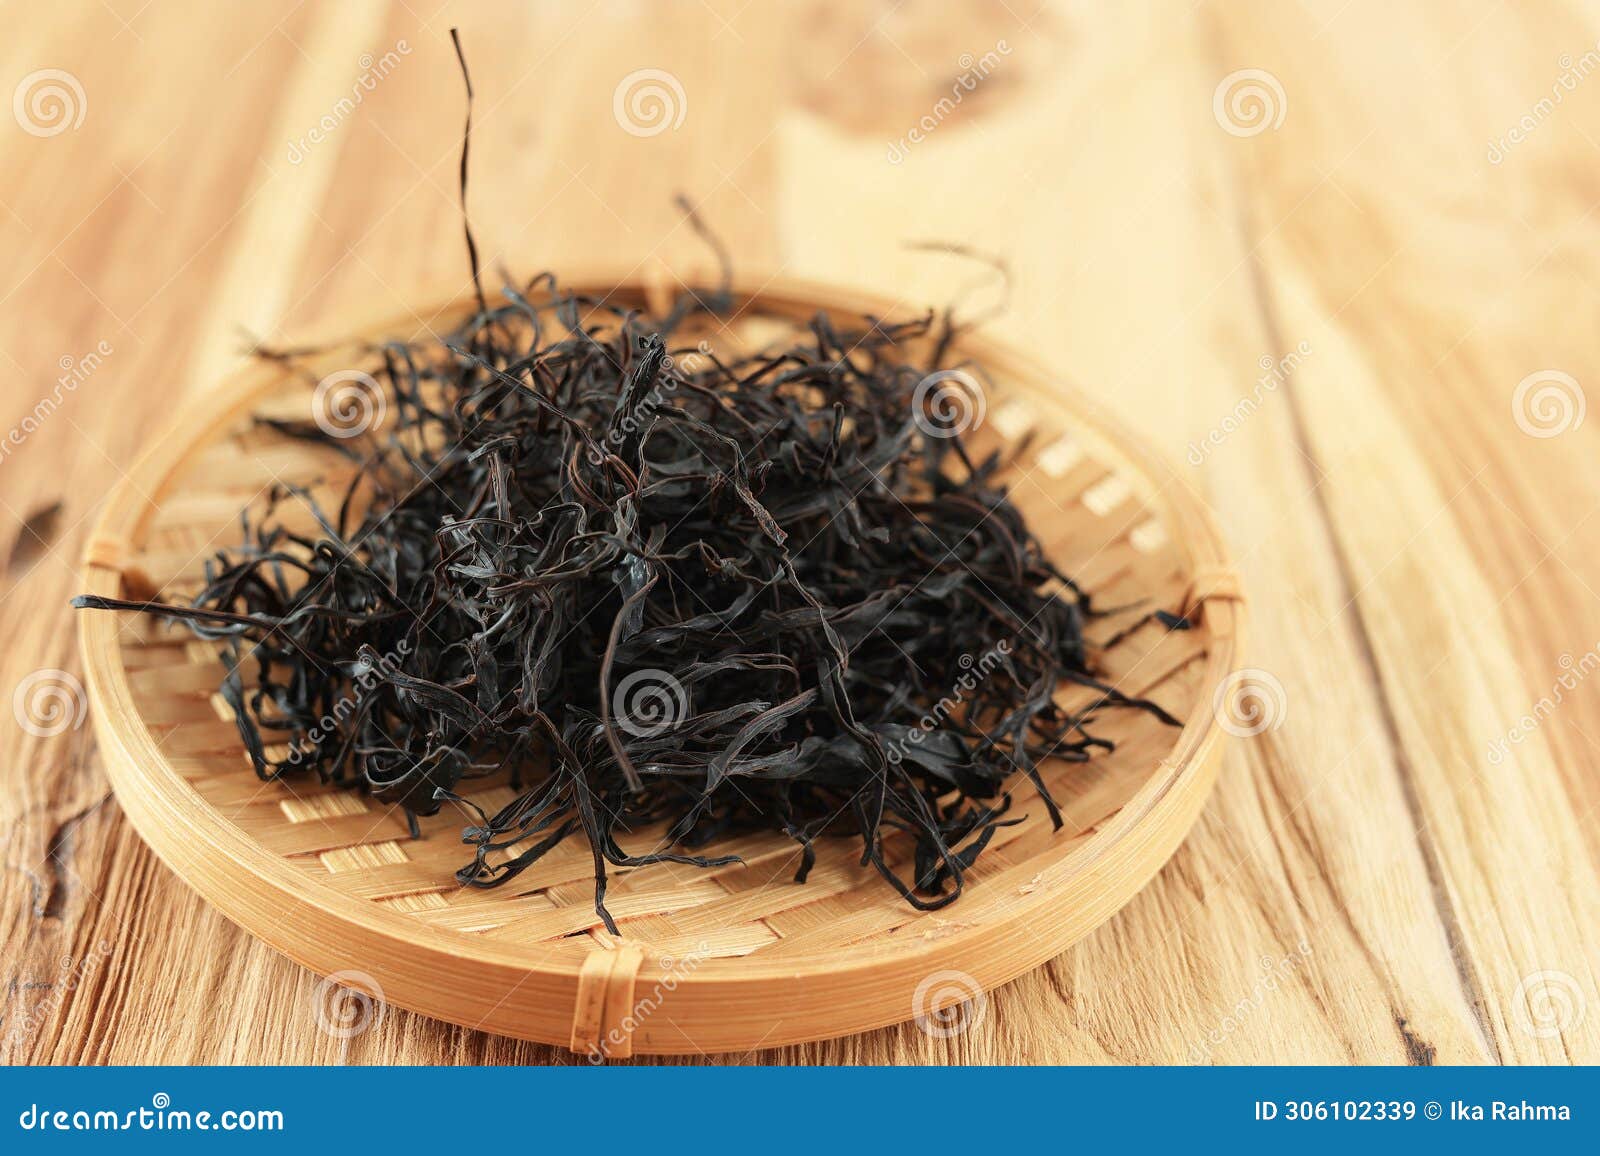 dried hijiki seaweed, japanese cooking ingredient